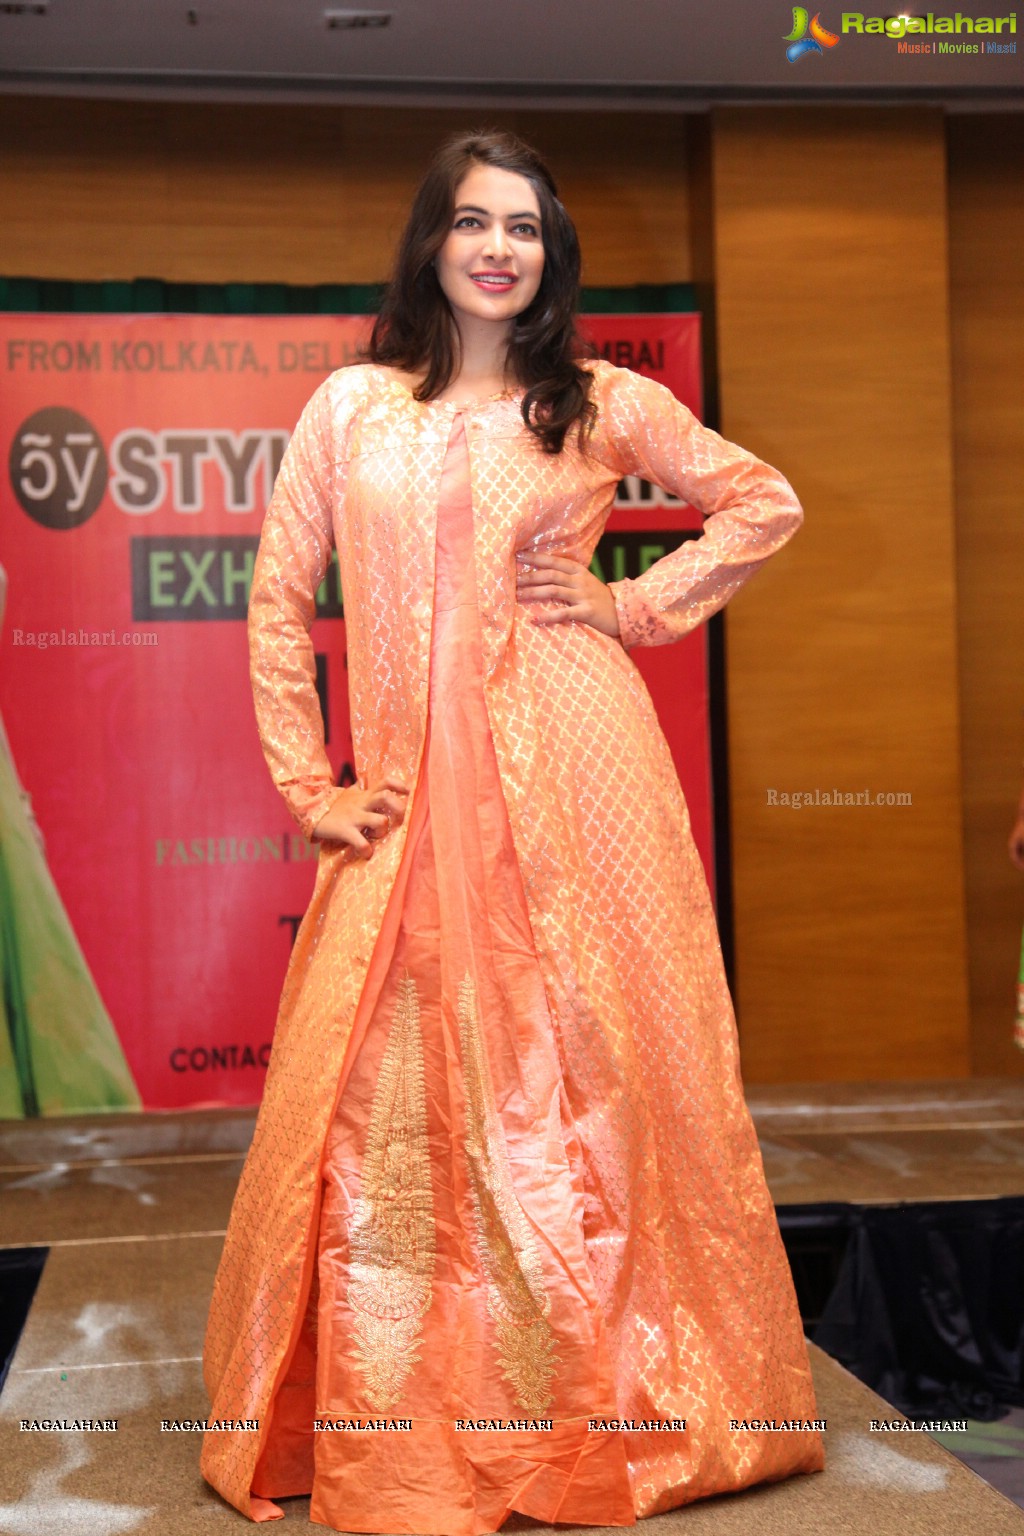 Grand Fashion Showcase of Style Bazaar Fashion Expo at Hotel Marigold